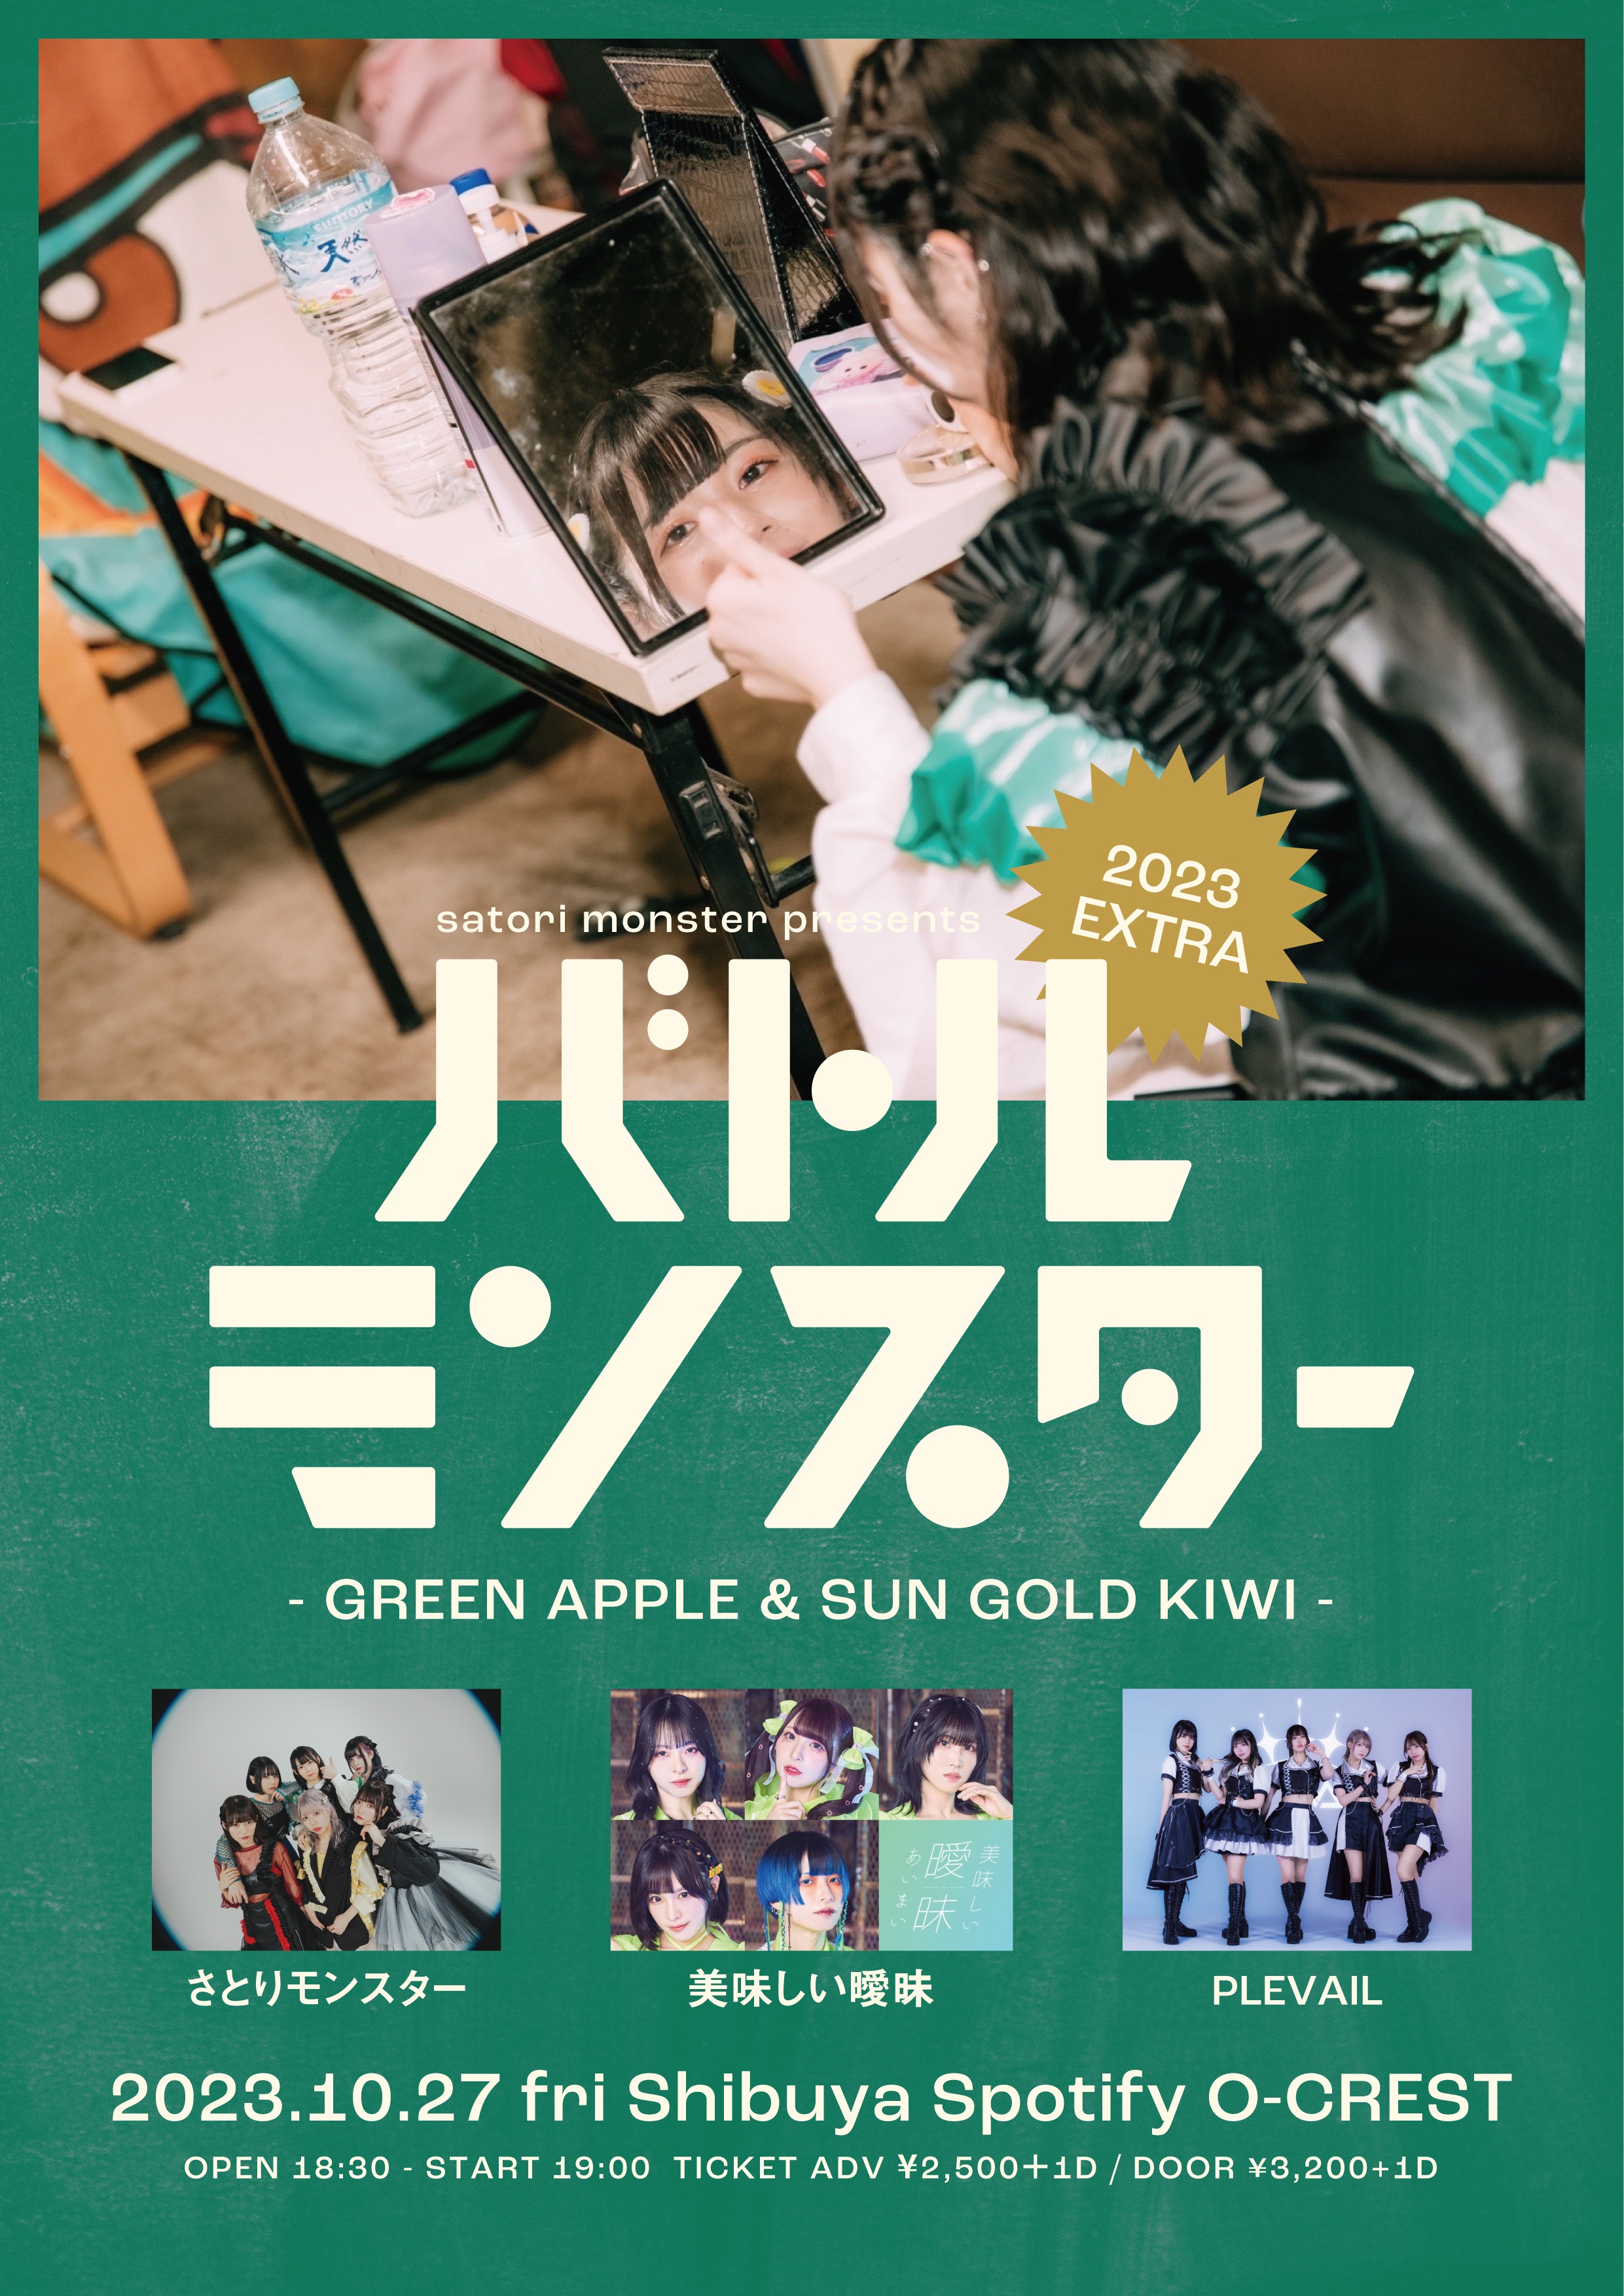 SATORI MONSTER PRESENTS   『バトルモンスター 2023』   〜GREEN APPLE & SUN GOLD KIWI〜